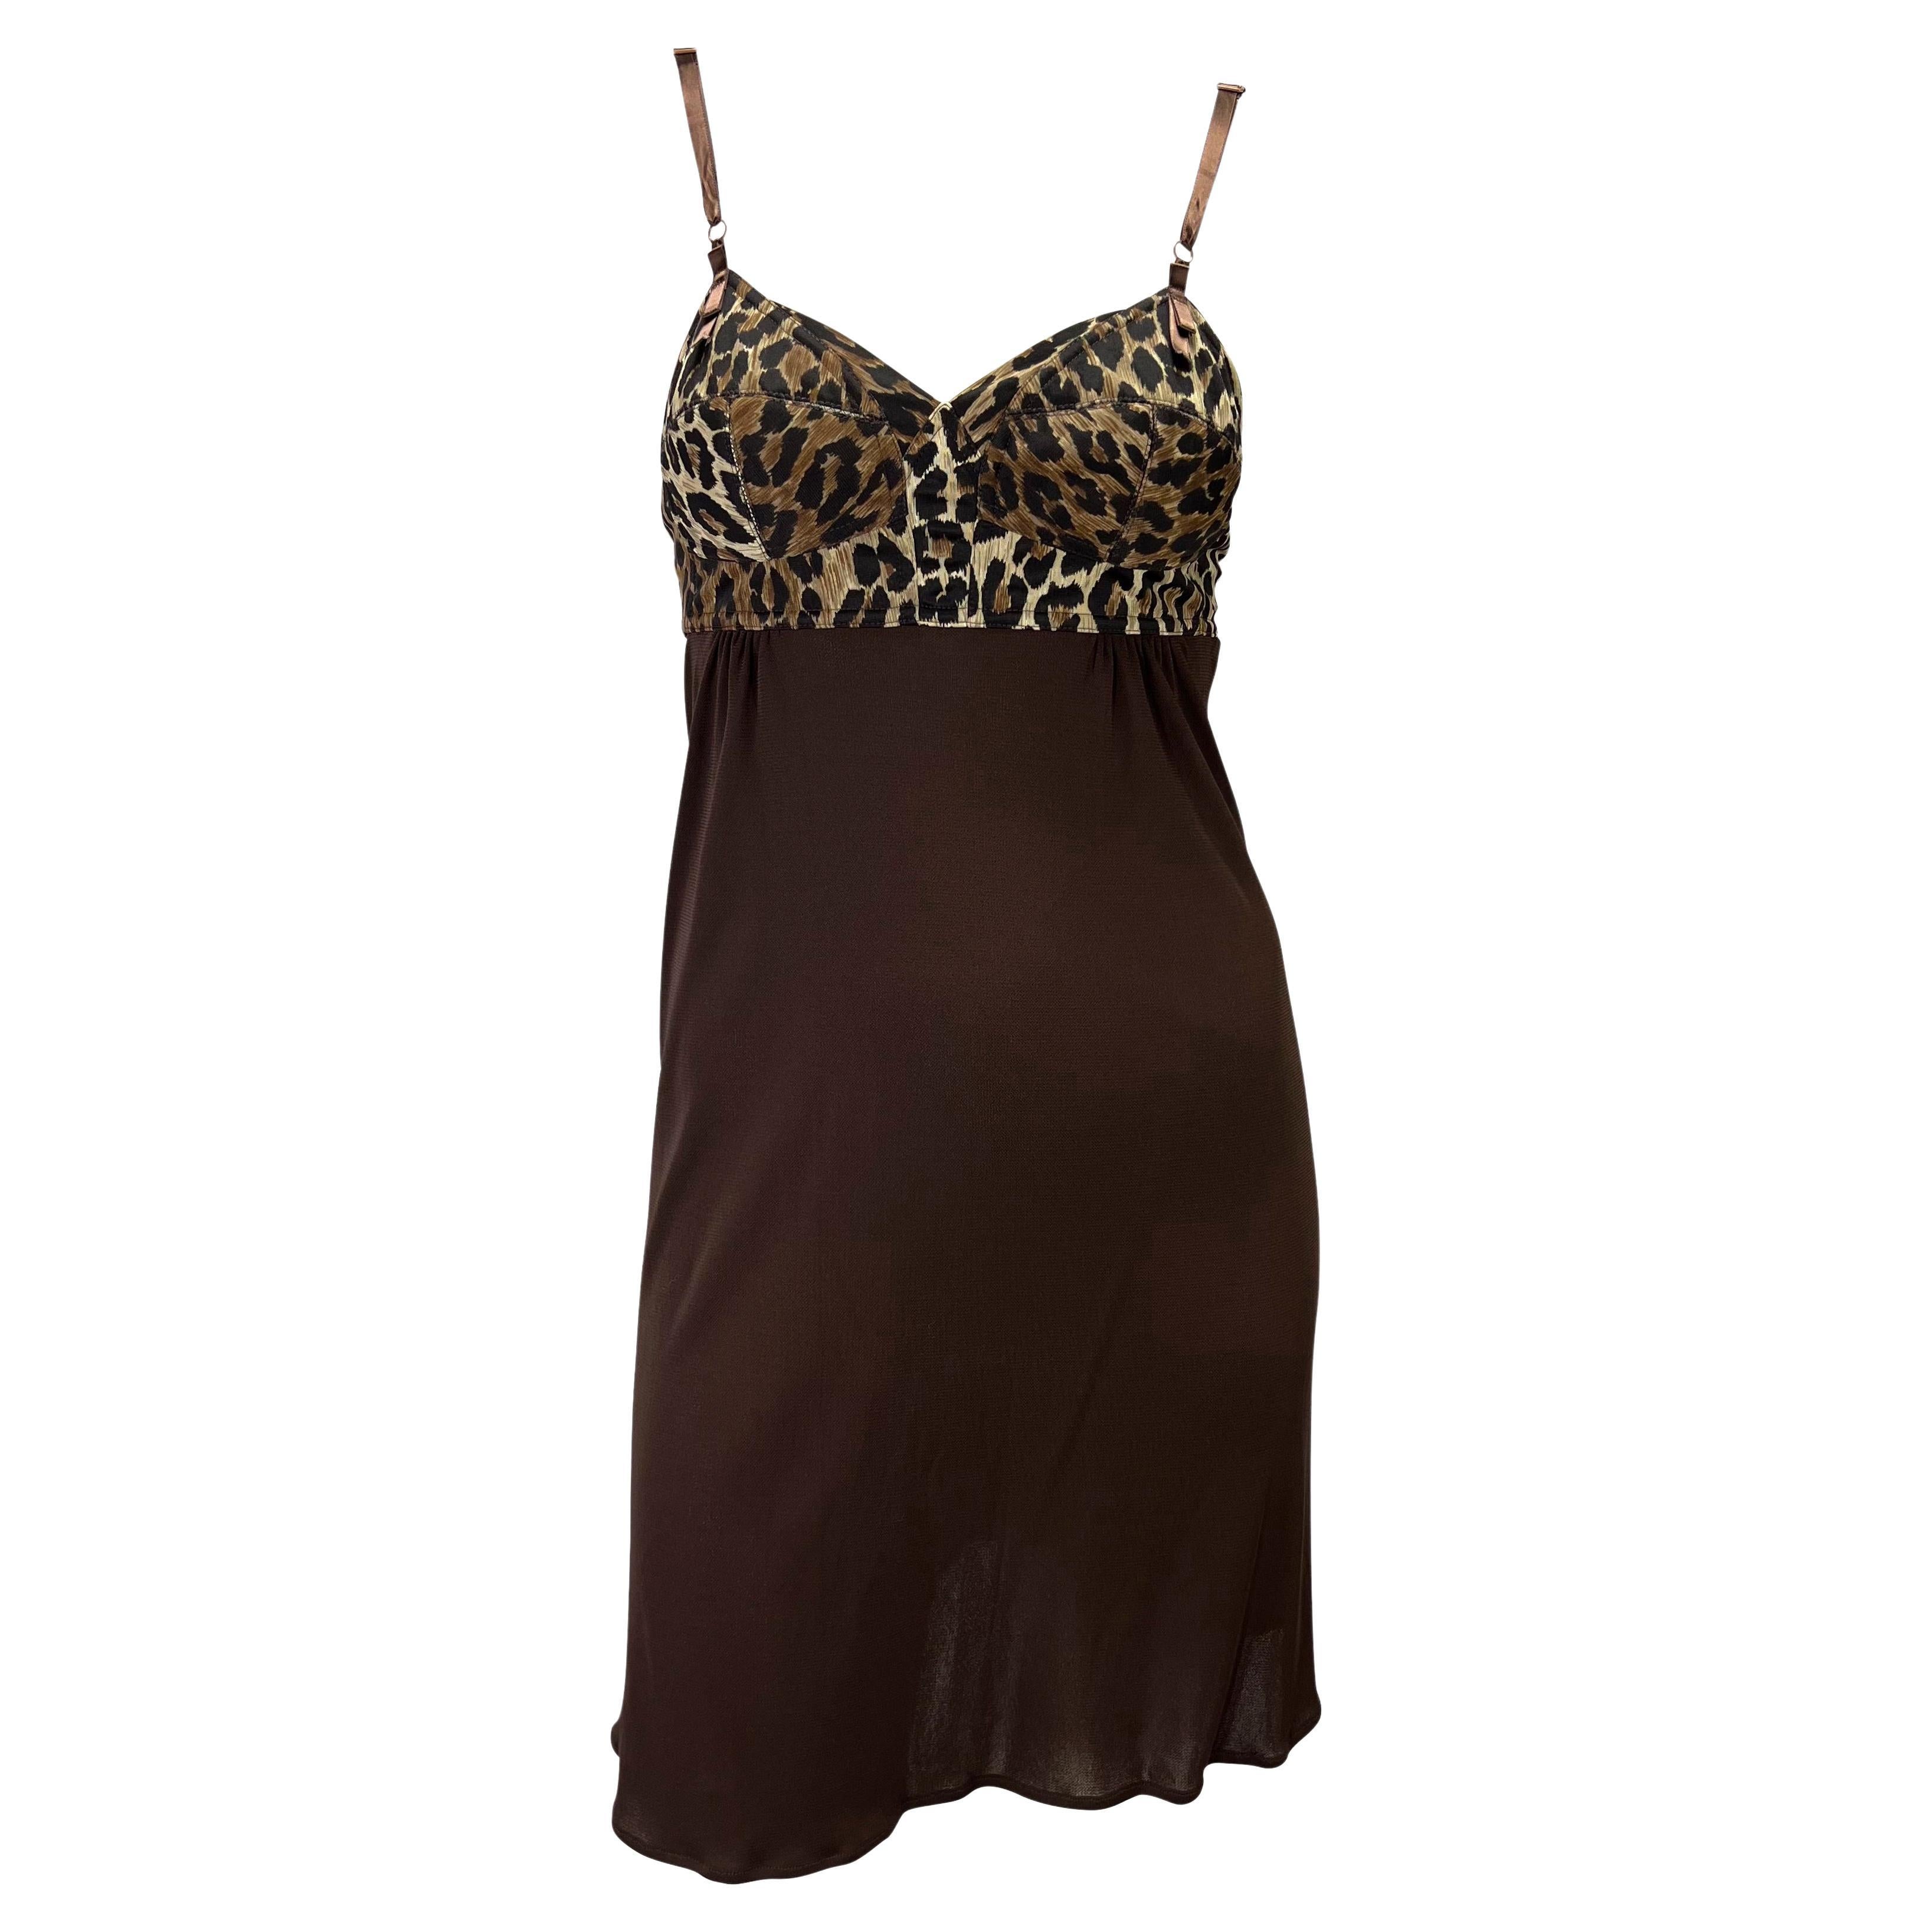 S/S 1997 Dolce & Gabbana Cheetah Print Sheer Brown Bustier Slip Dress For Sale